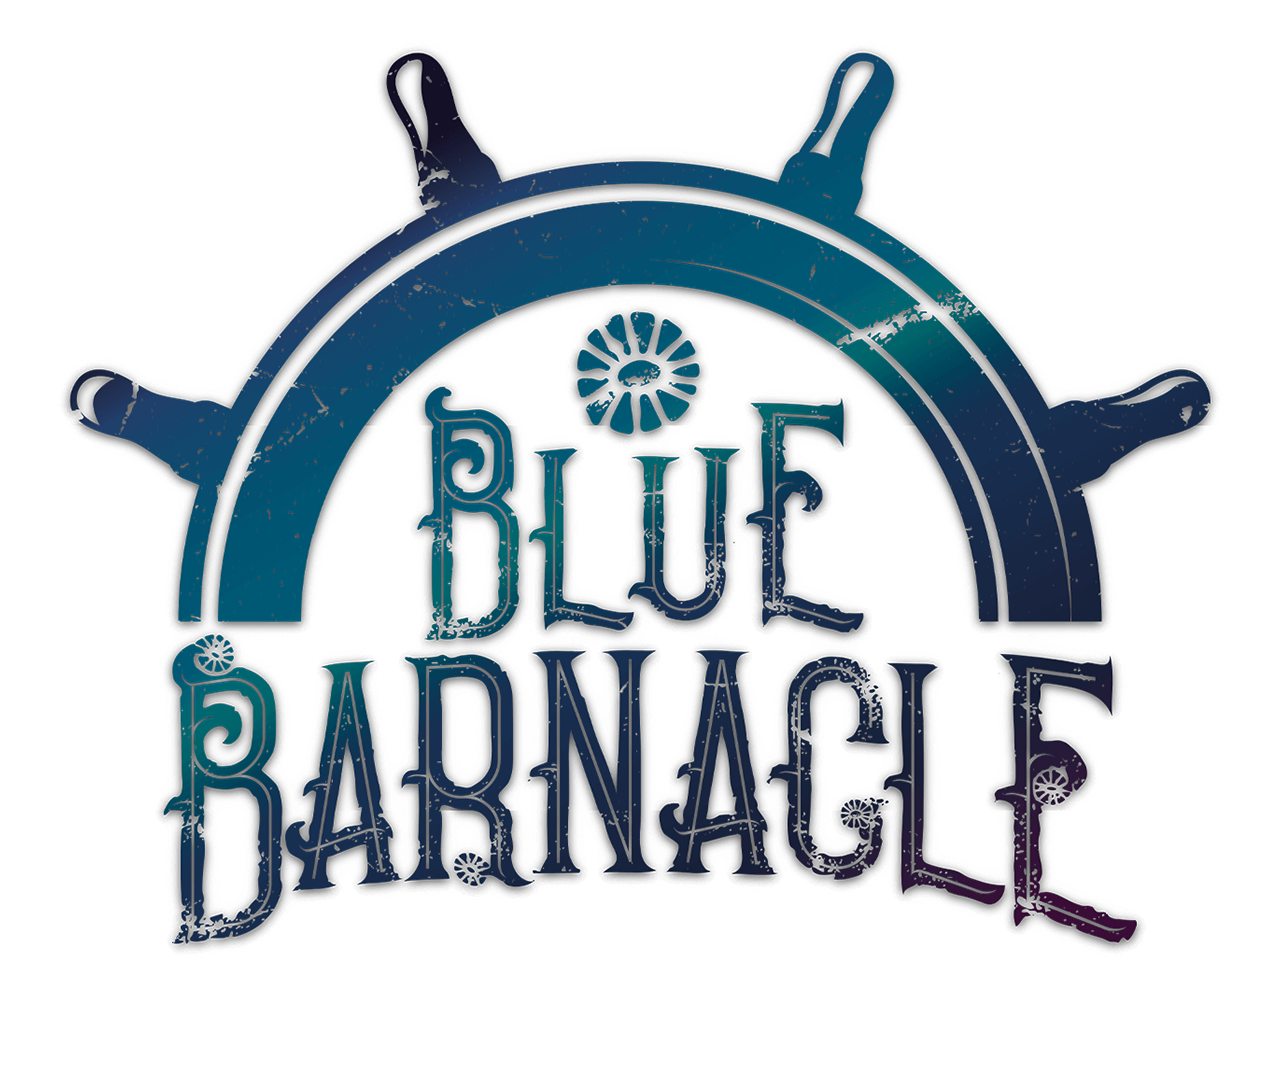 Blue Barnacle Logo